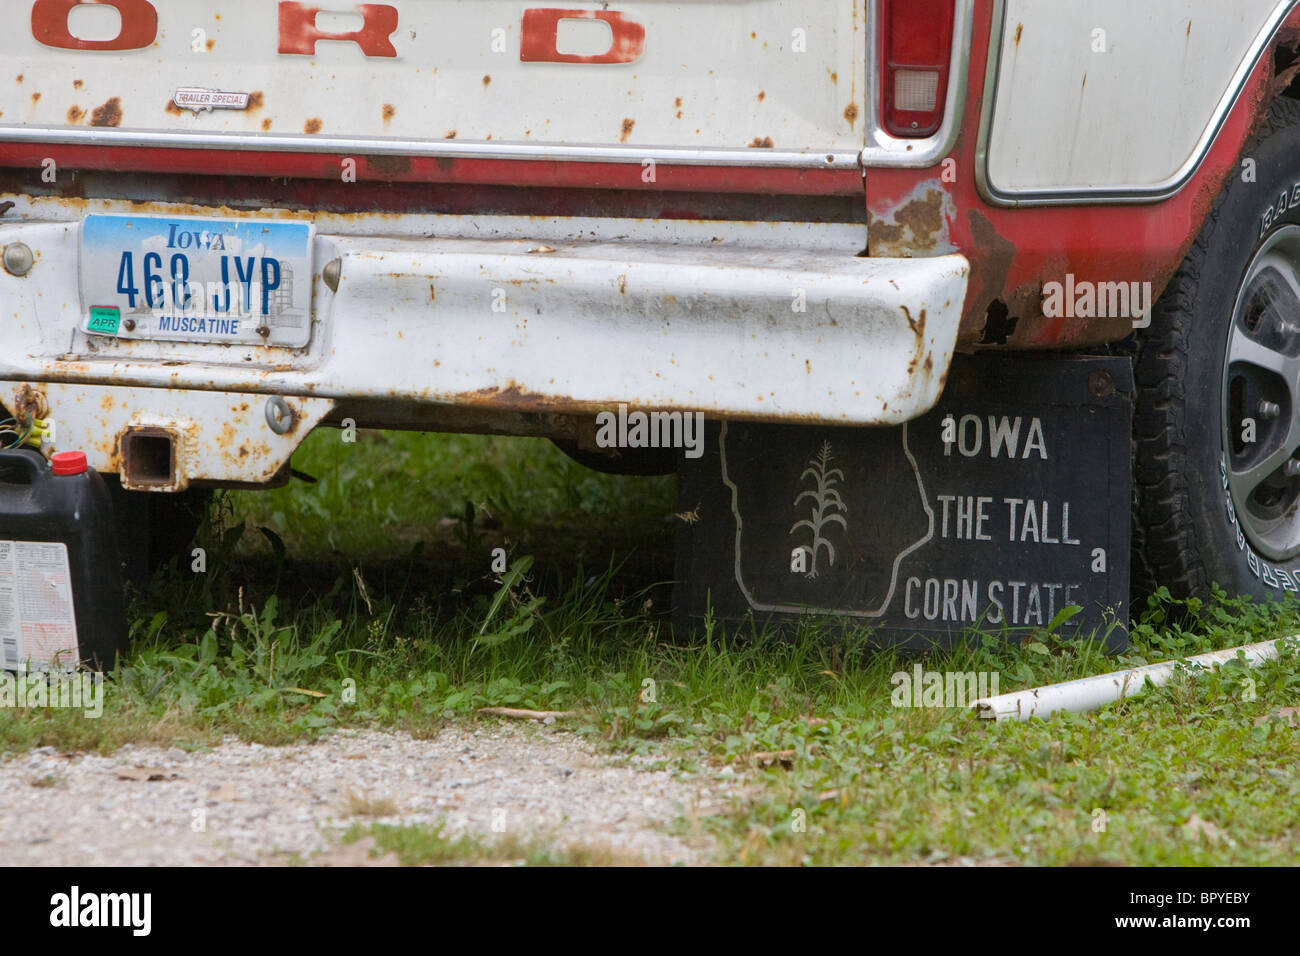 An old pickup truck in Iowa with Iowa mudflaps. Stock Photo